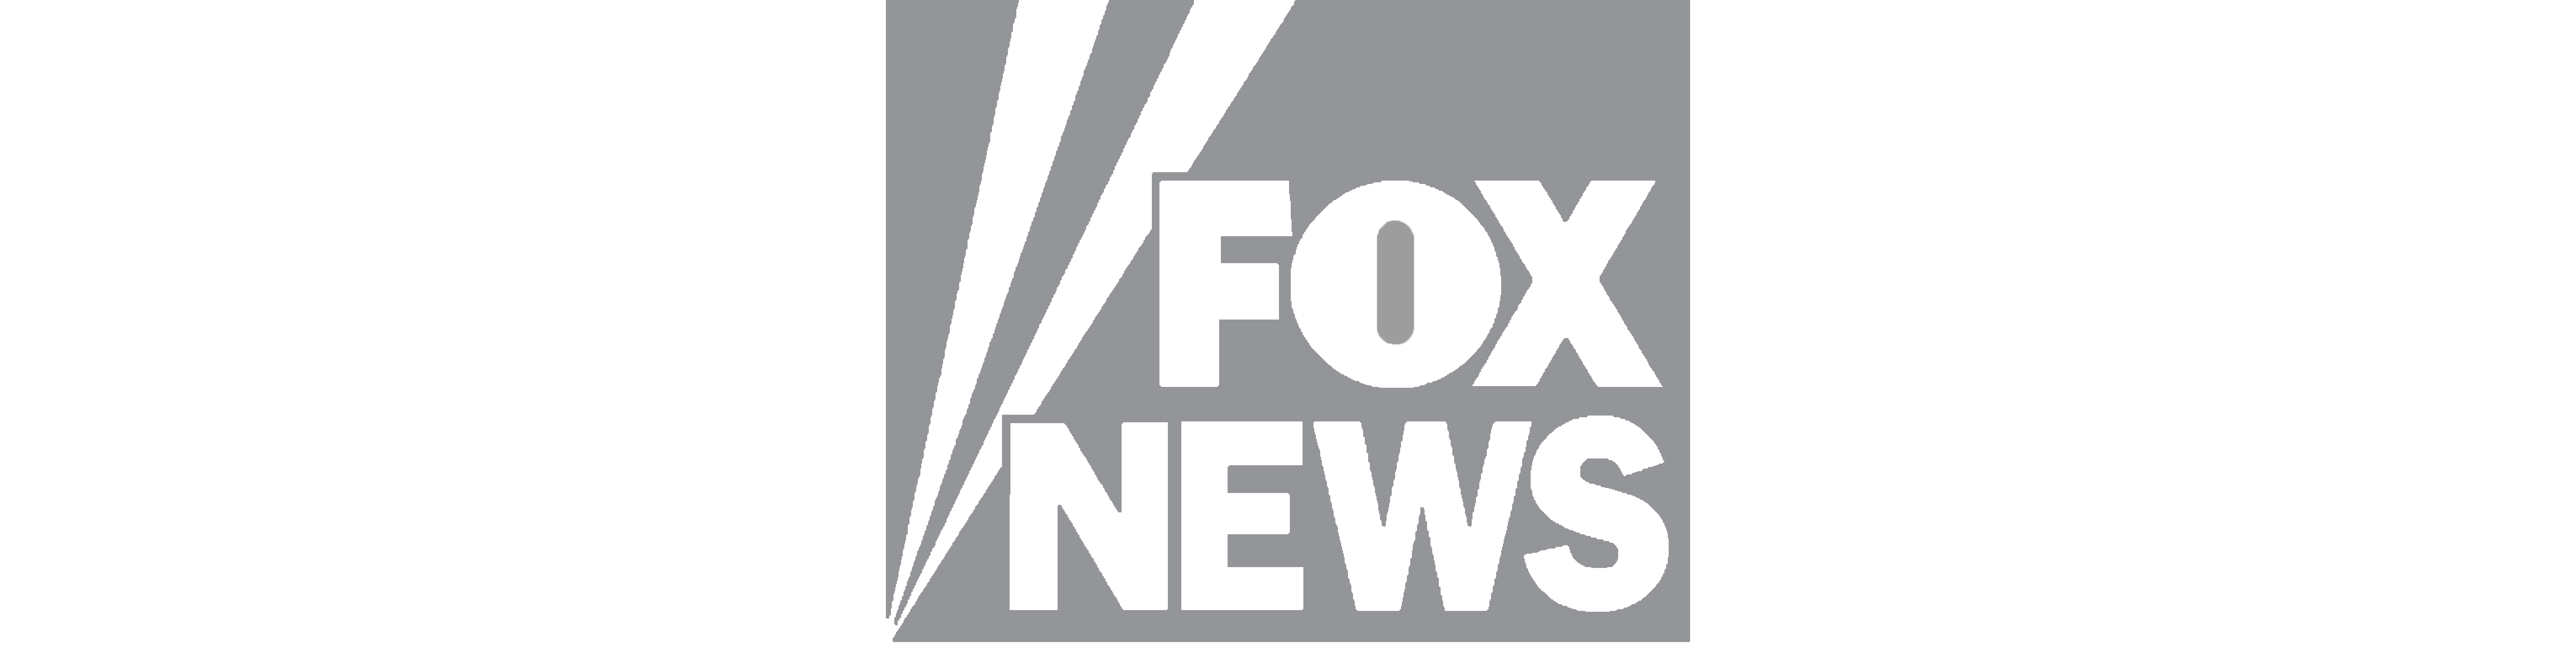 Fox News Logo PNG File